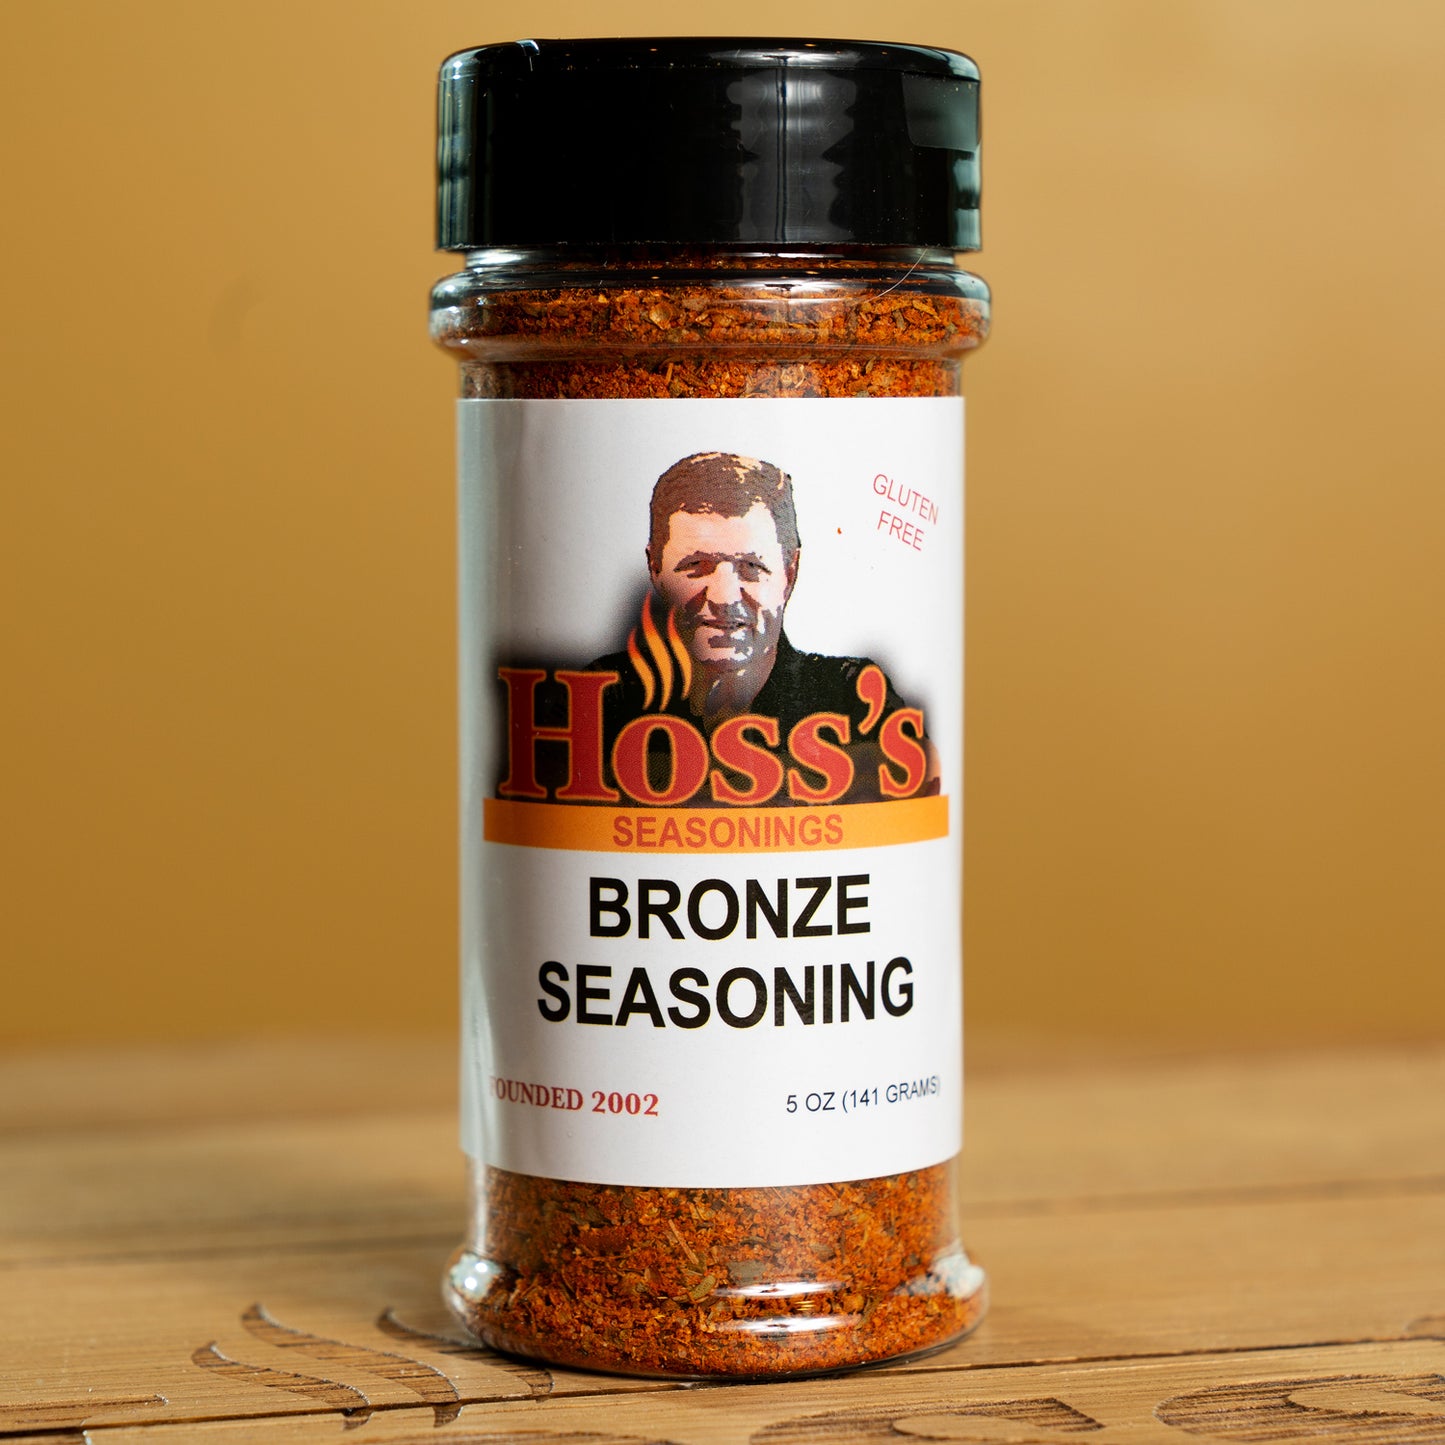 Hoss's Bronze Seasoning